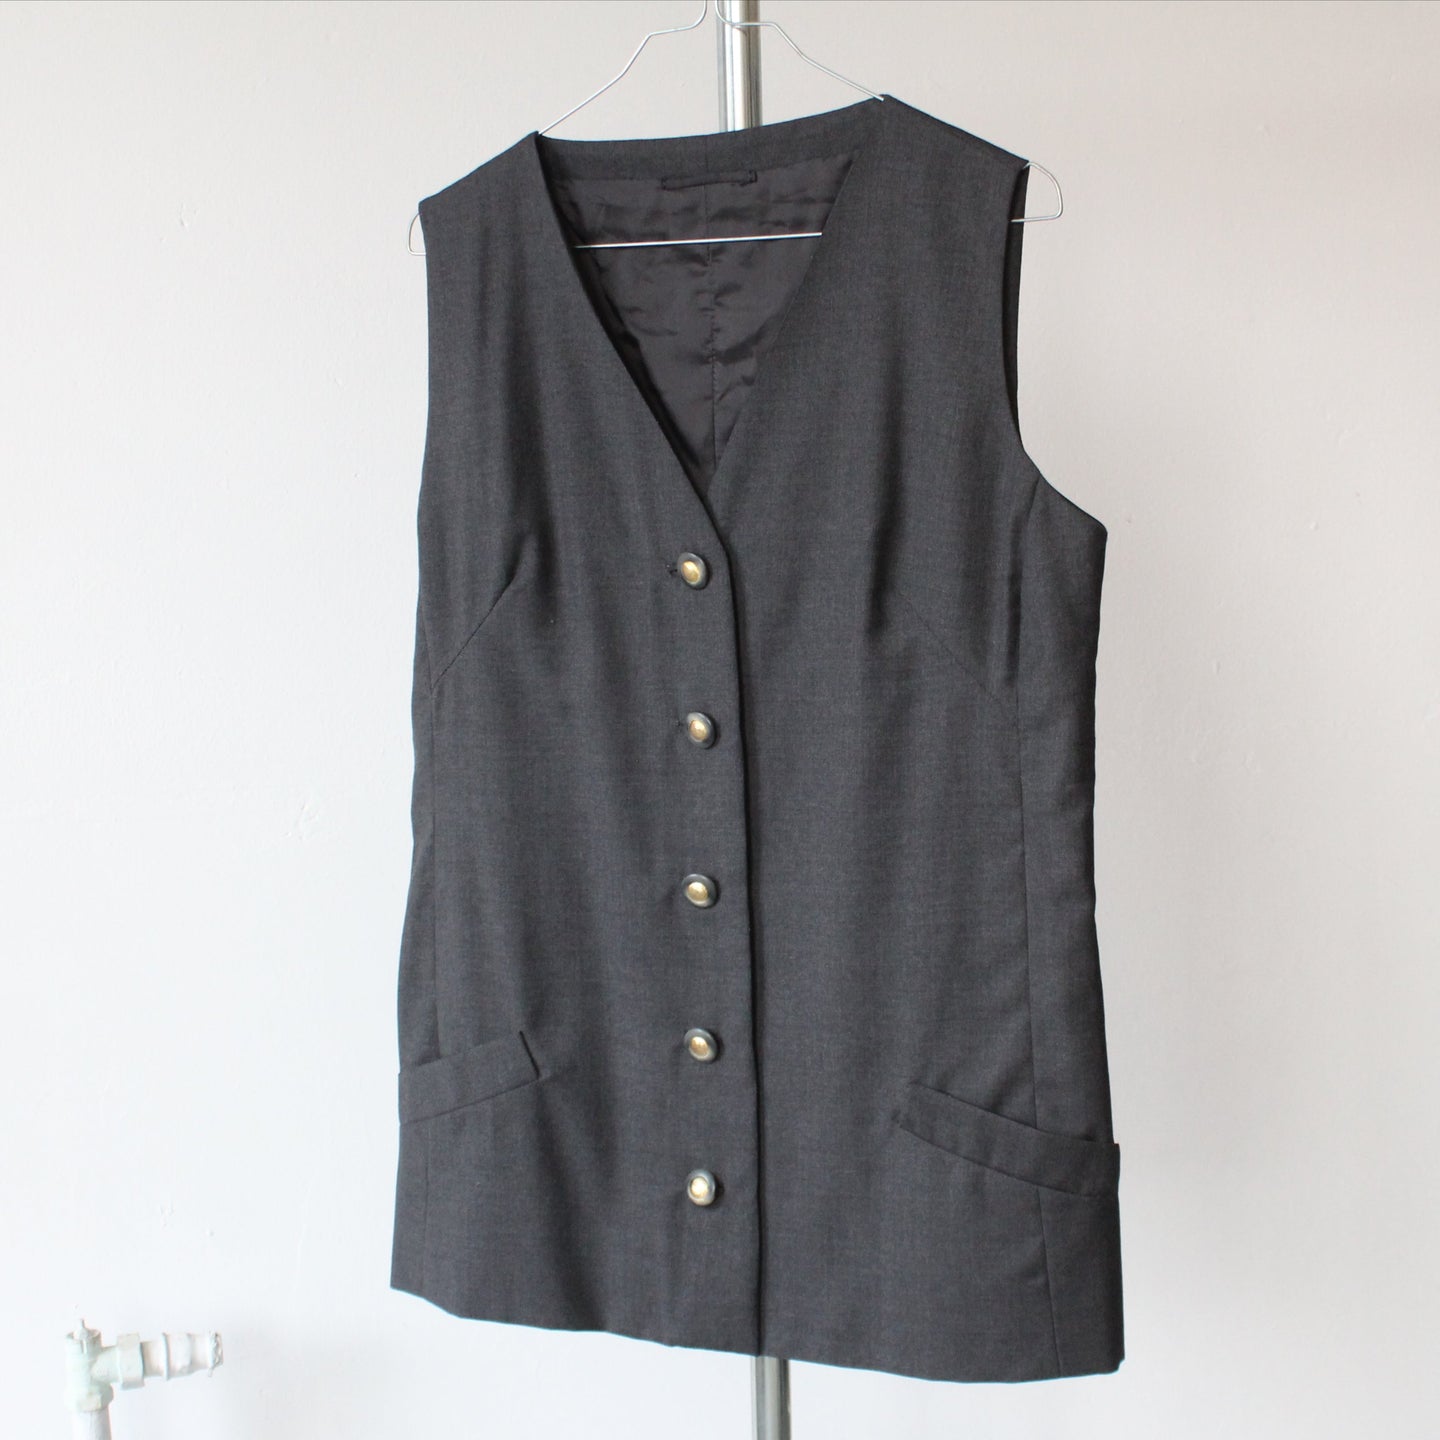 Vintage grey waistcoat, size S-M